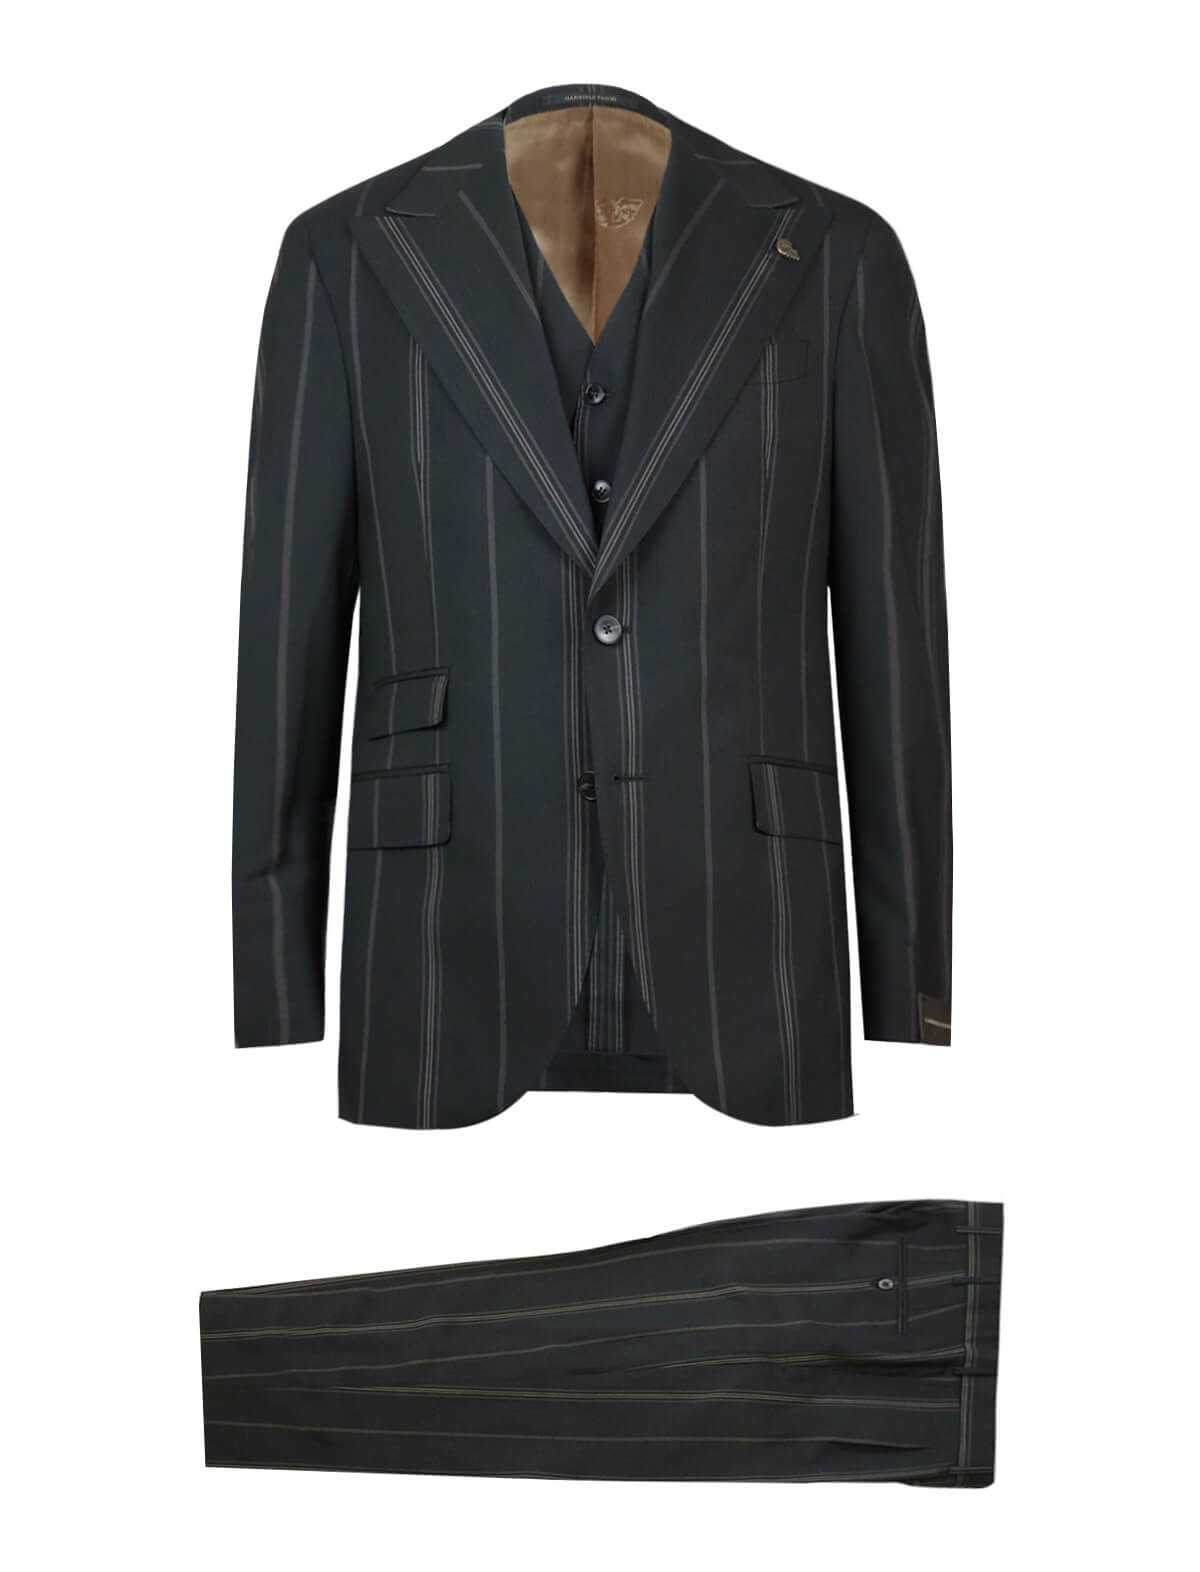 GABRIELE PASINI Milano 3-Piece Suit in Black/ Multi Stripes